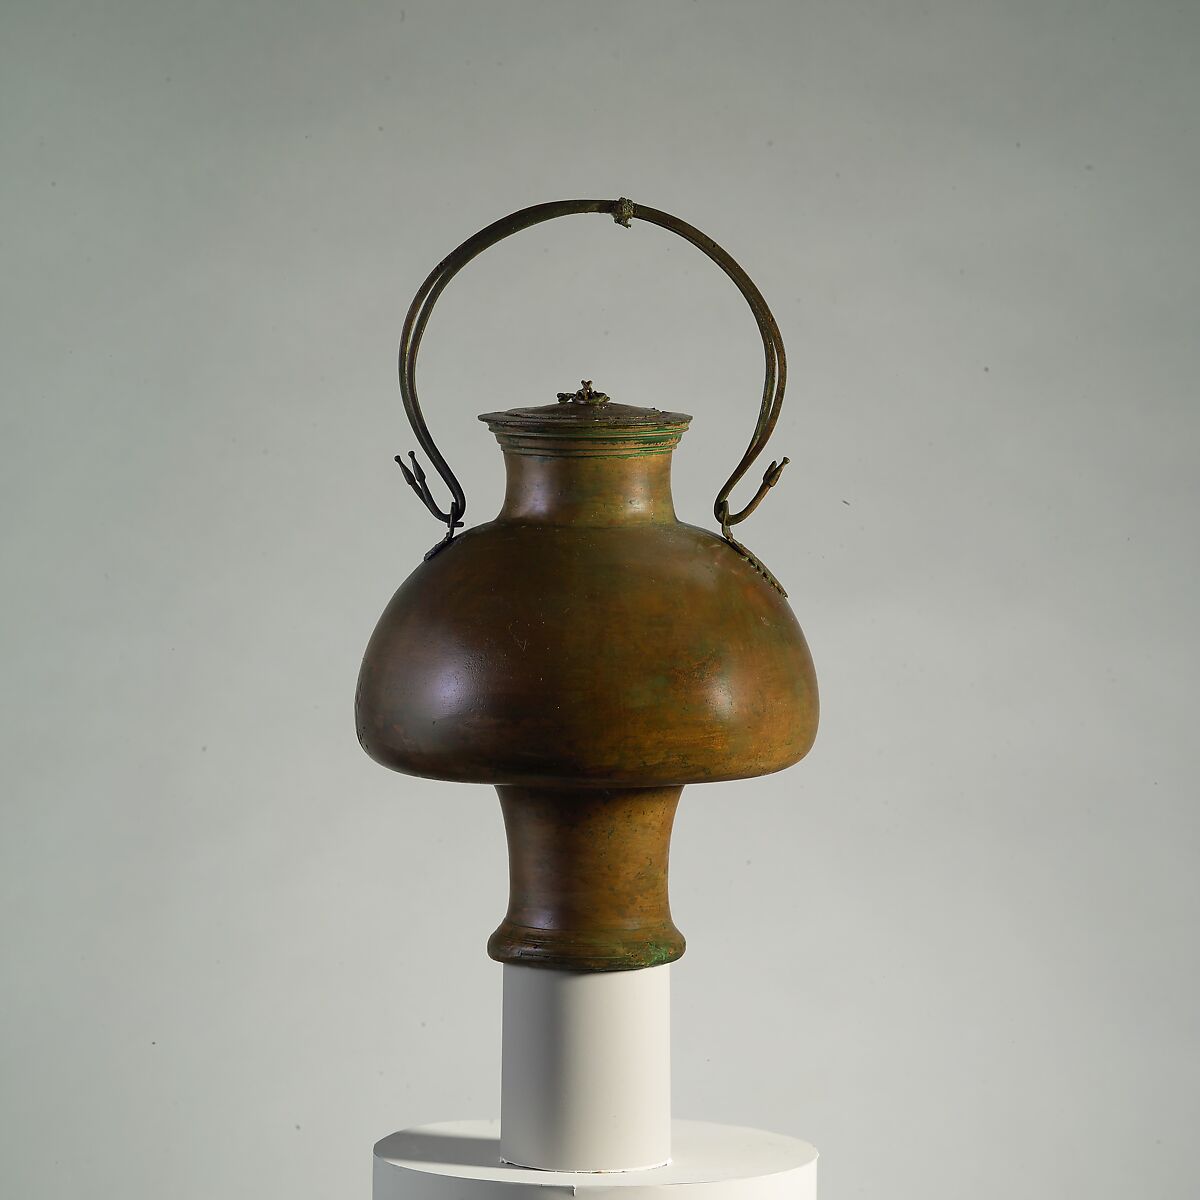 Bronze psykter with lid (vase for cooling wine)